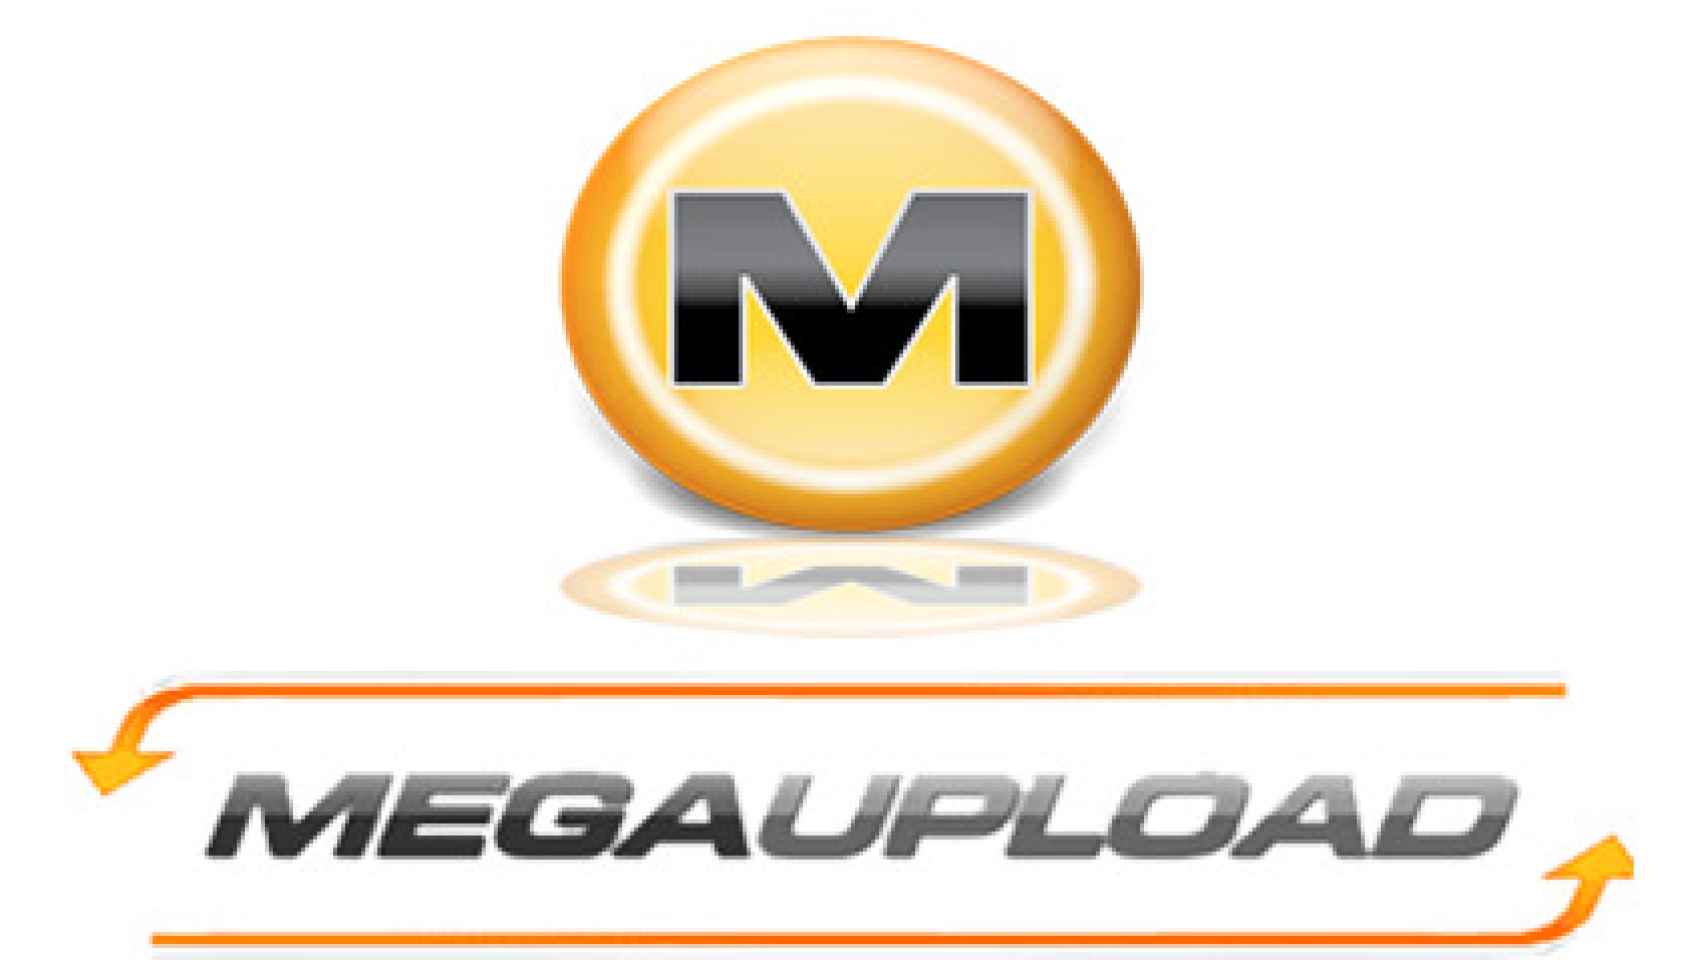 megaupload_logo